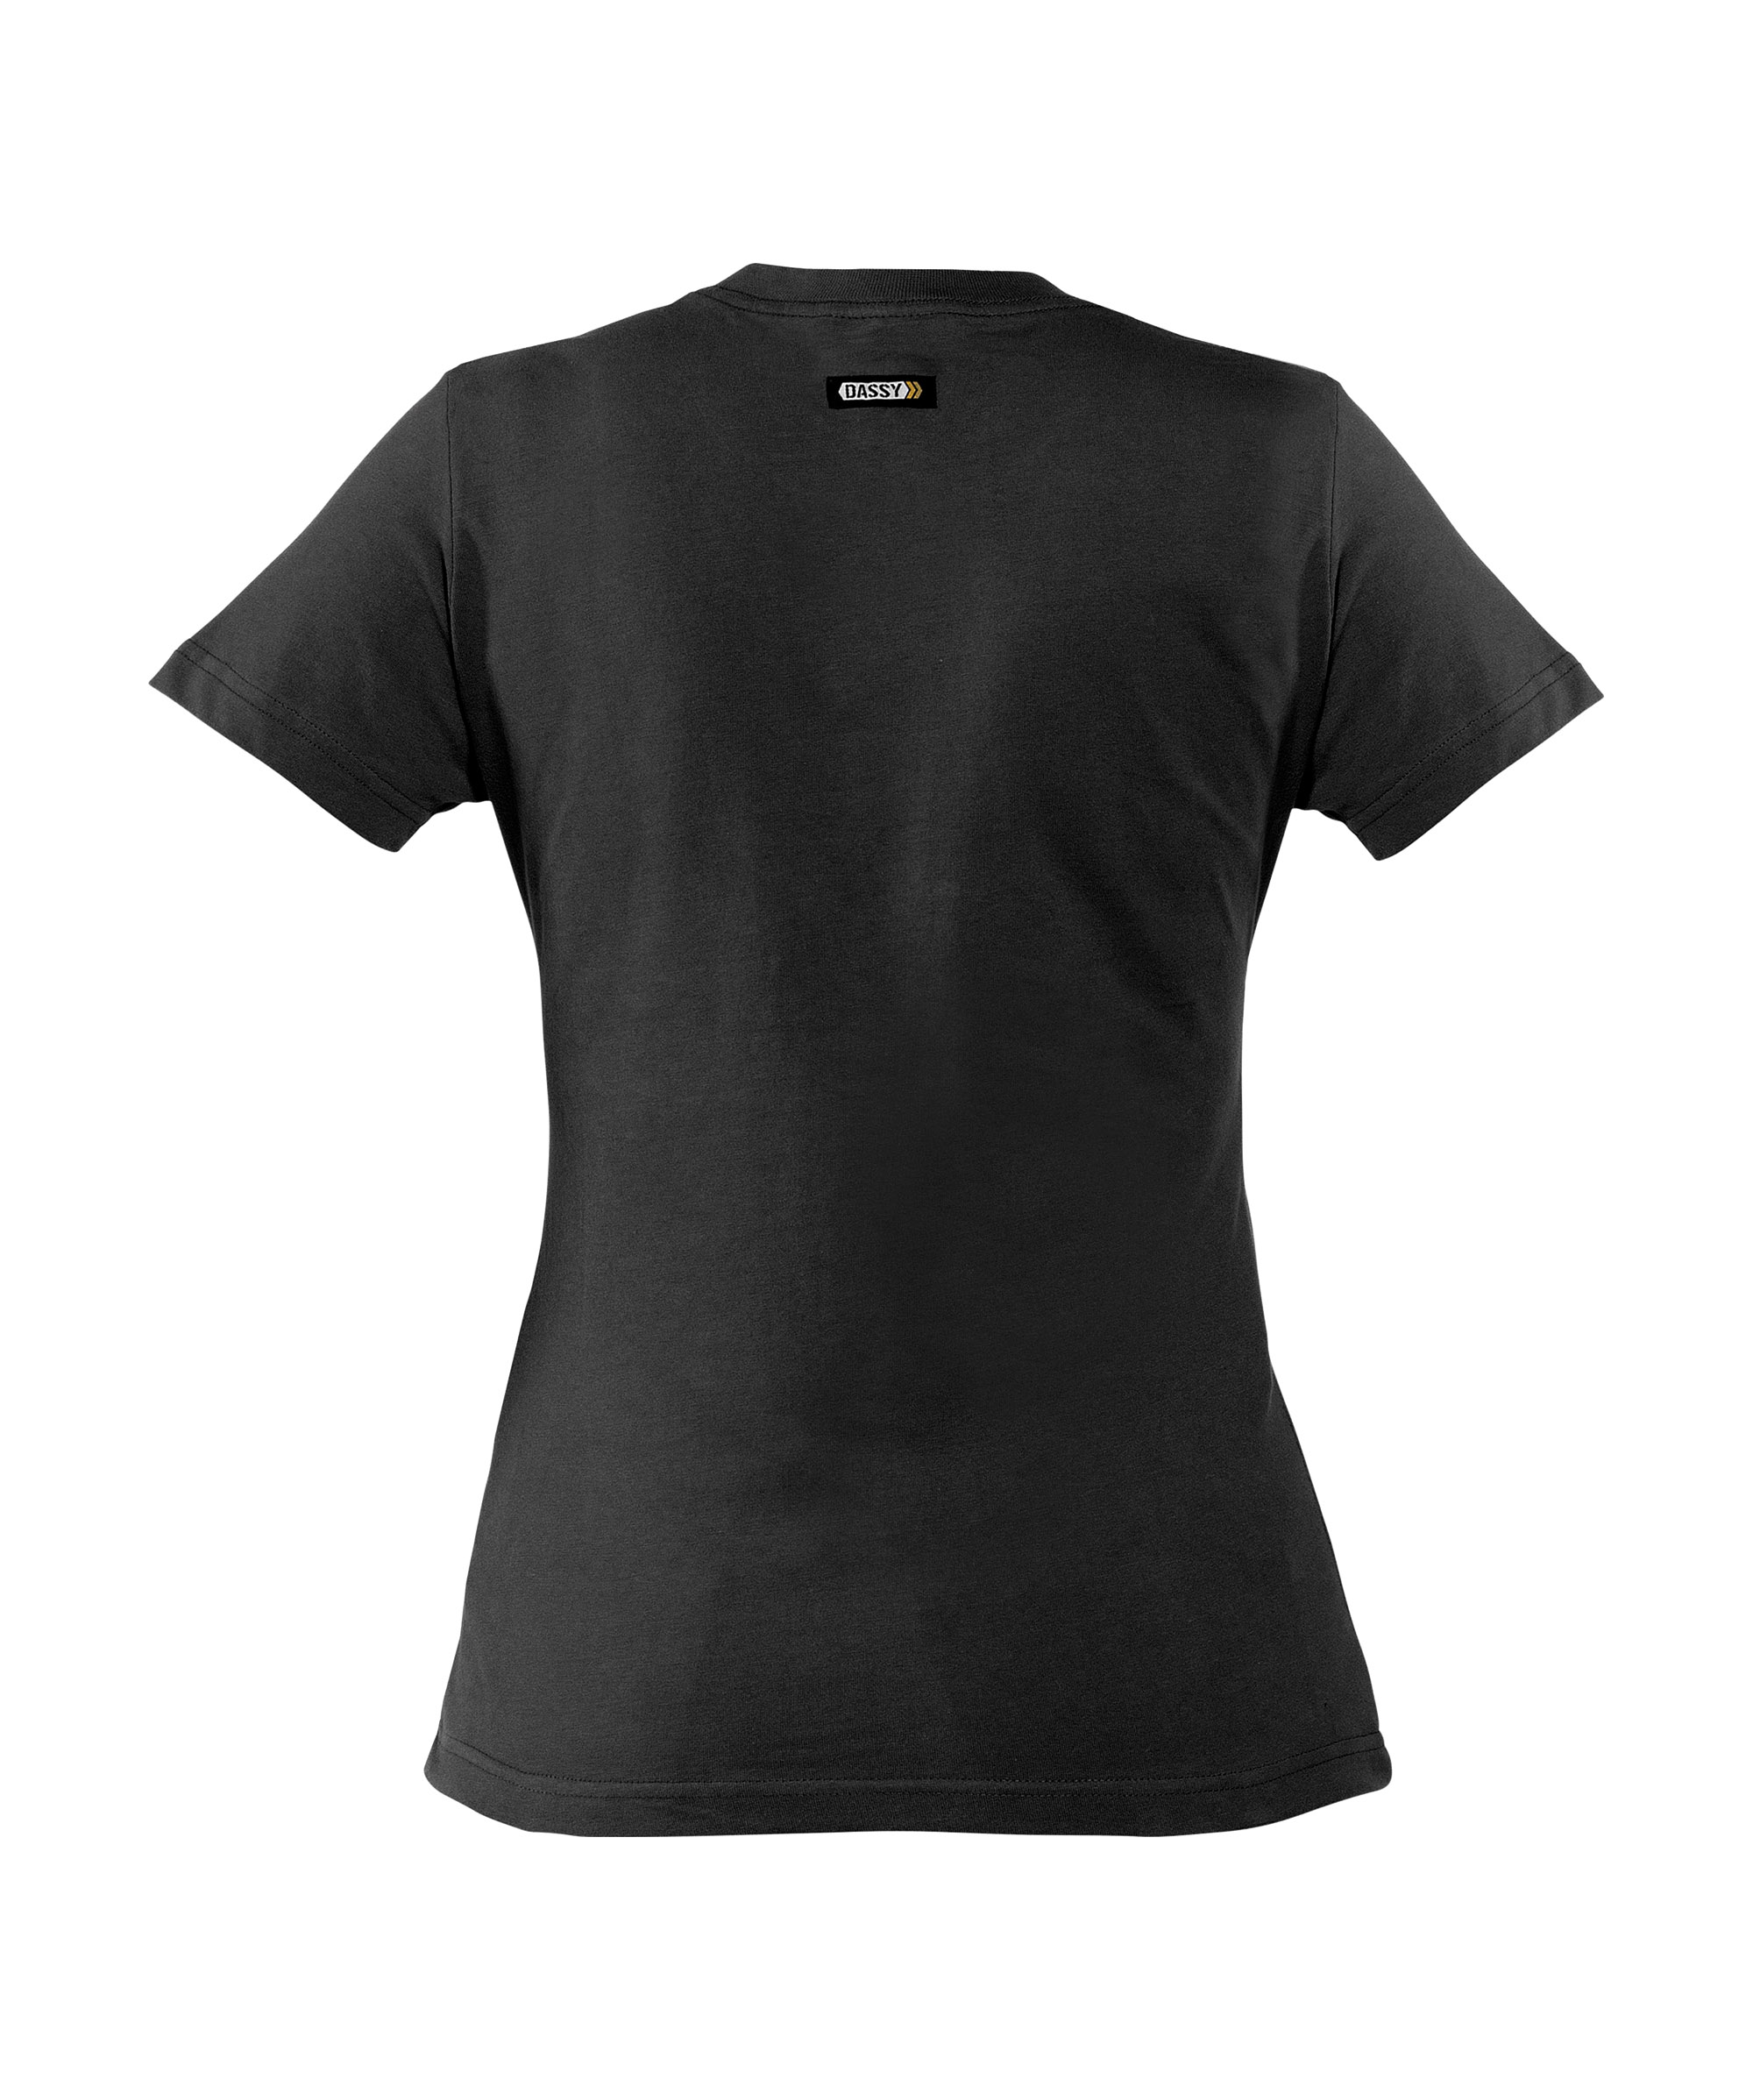 oscar-women_t-shirt_black_back.jpg